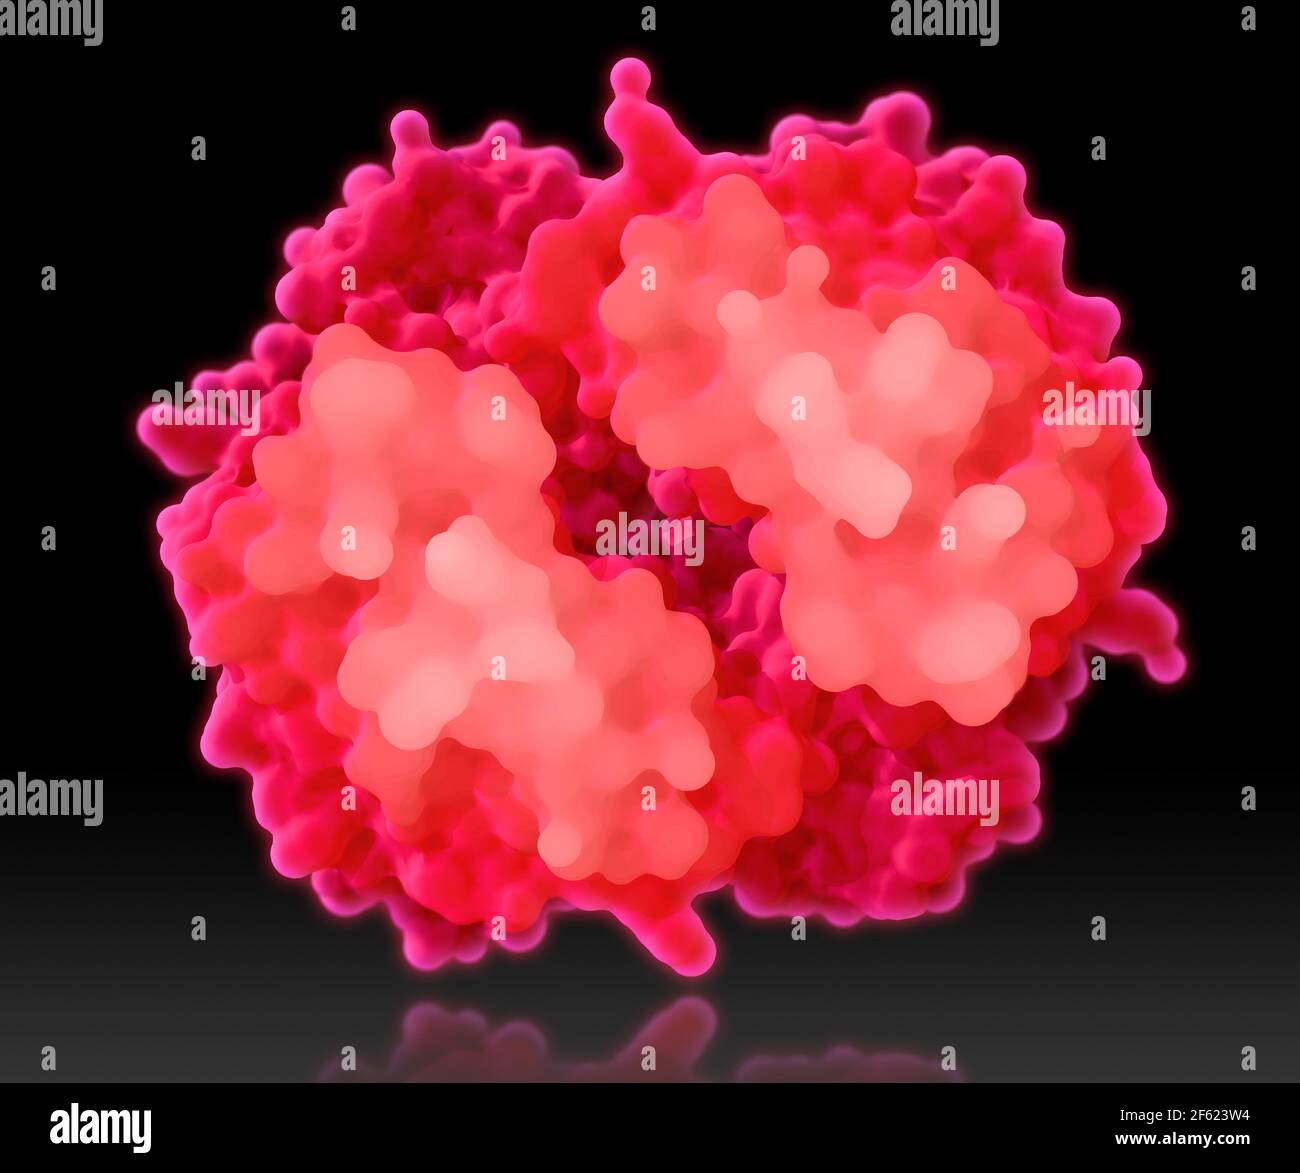 Hemoglobin, Molecular Model Stock Photo